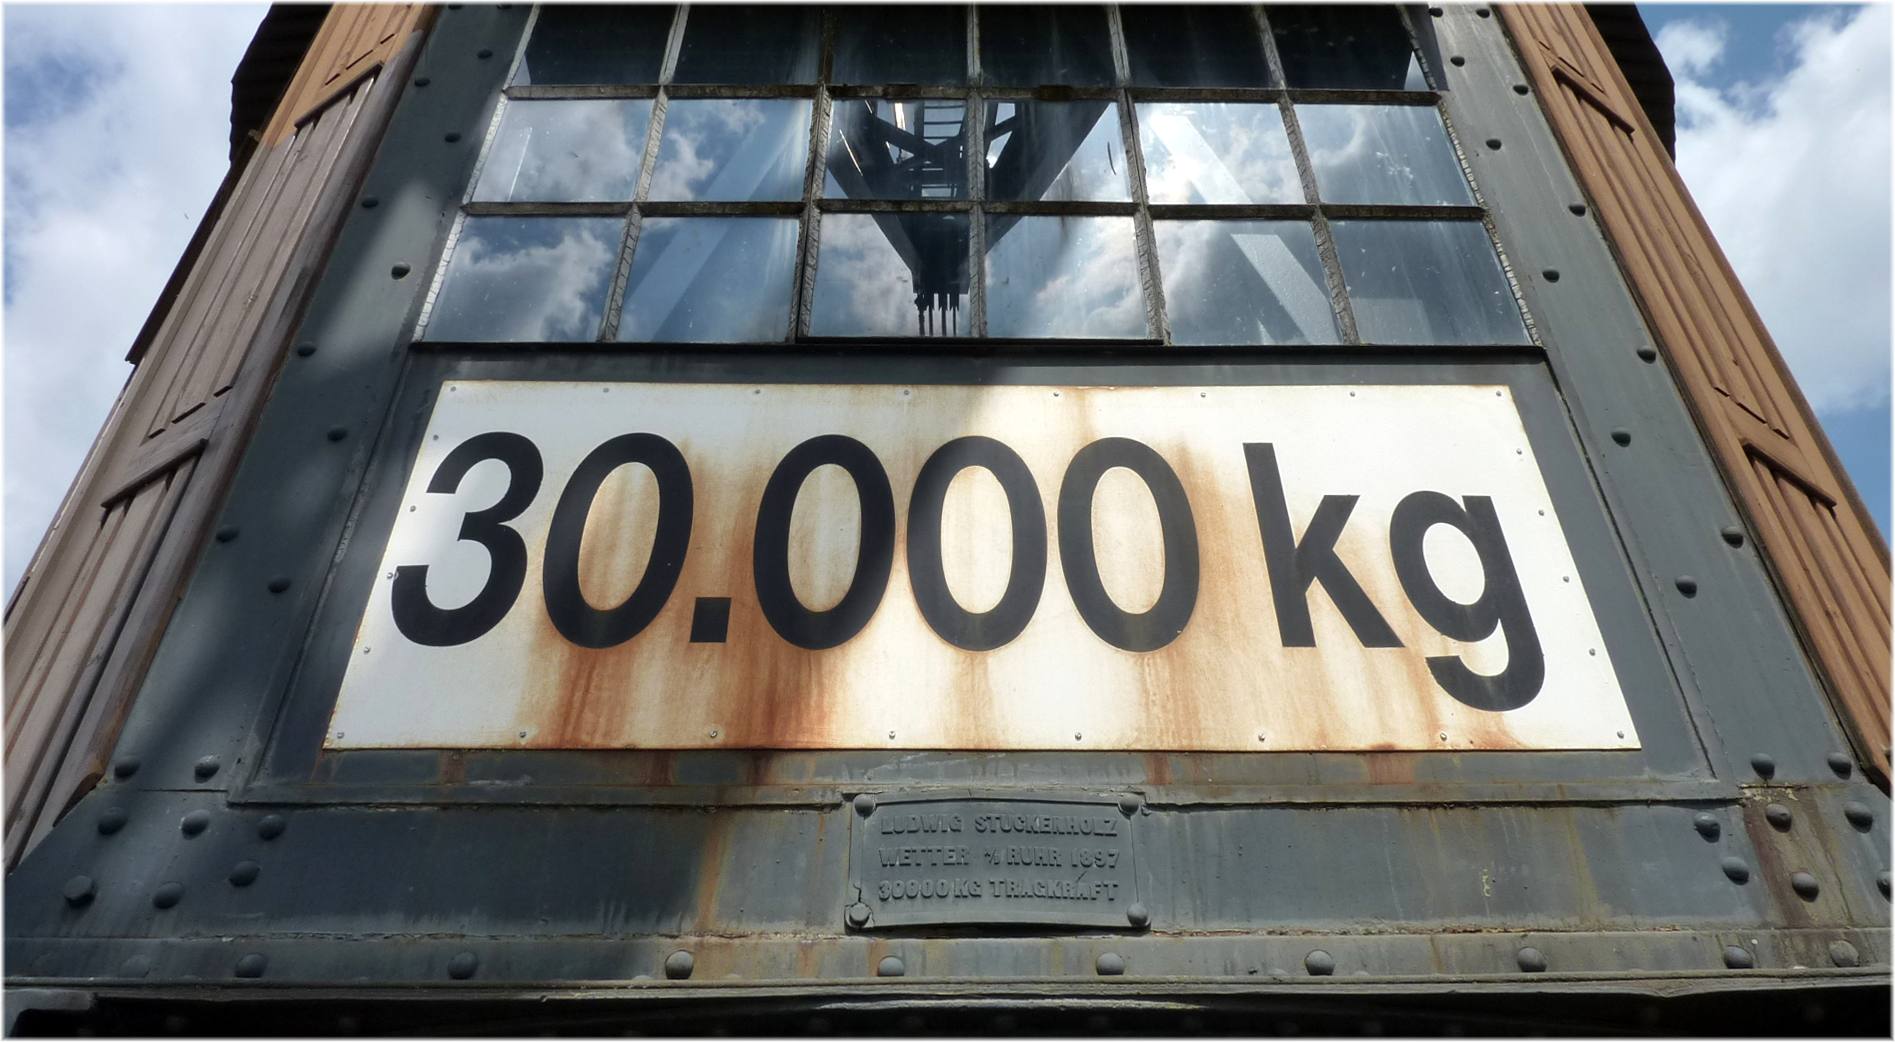 30.000 kg